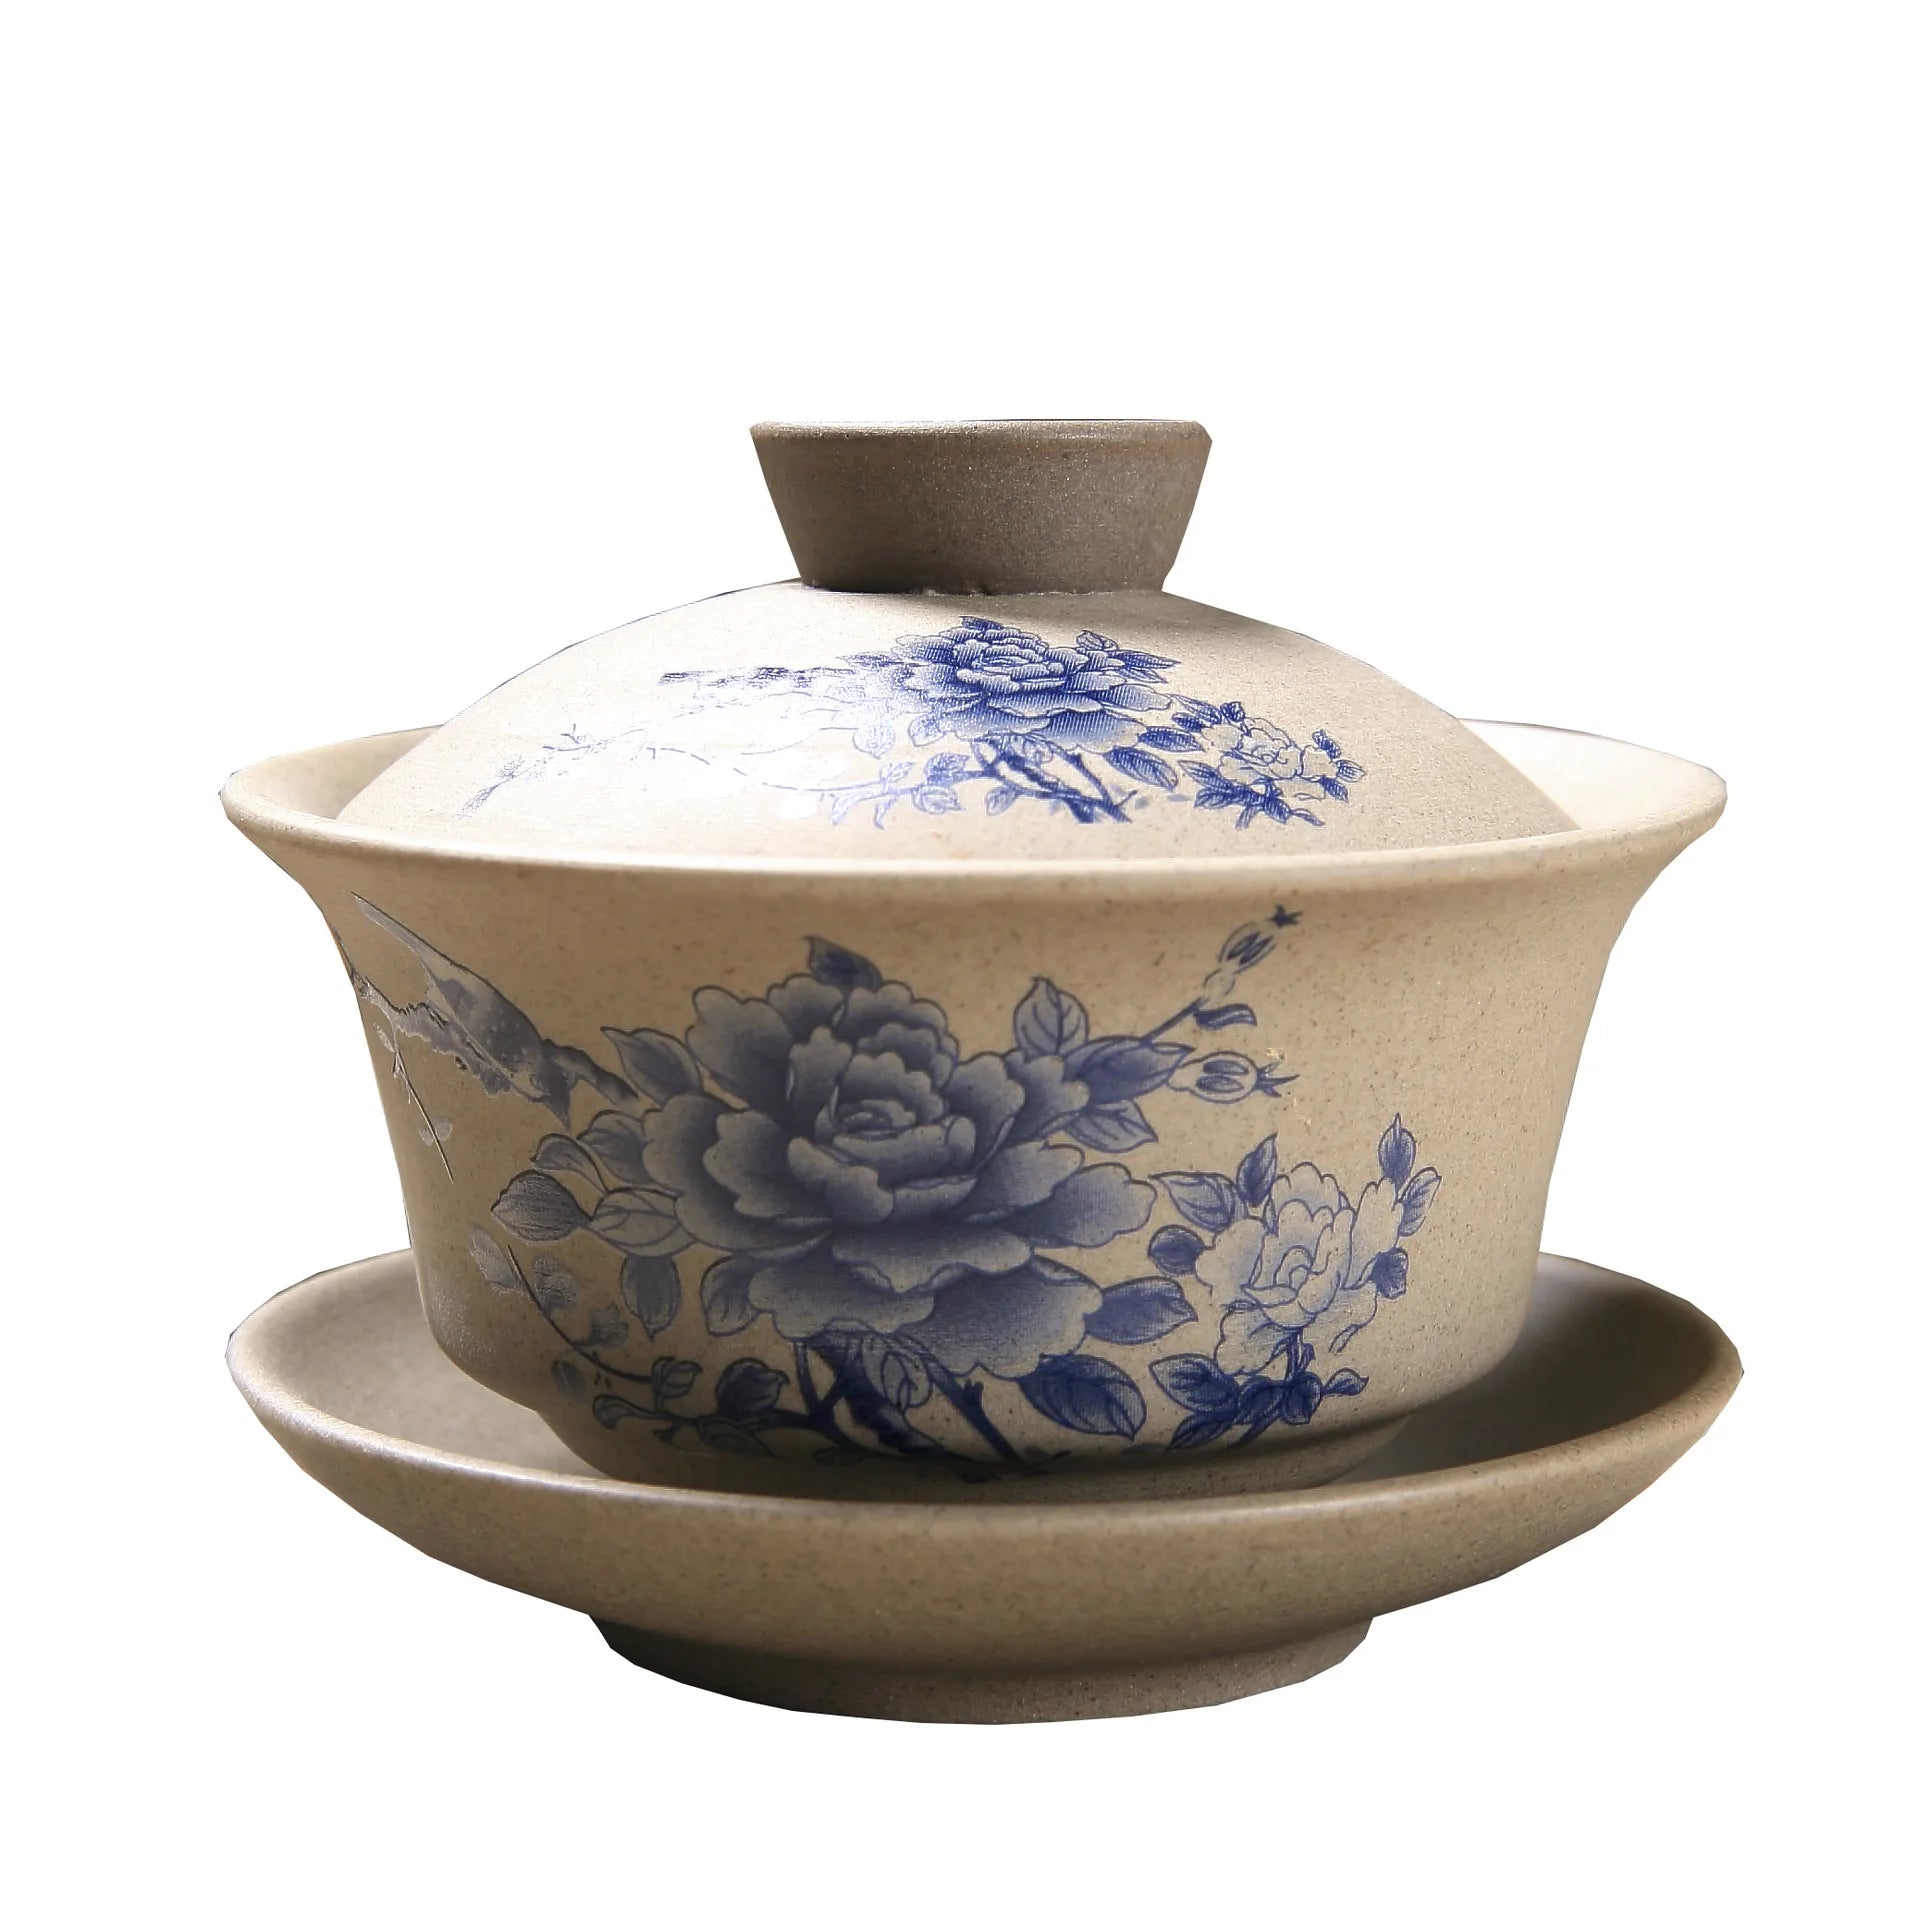 Cina kung fu teapot tembikar tanah liat cawan teh klasik gaiwan tradisional buatan tangan buatan tangan cawan